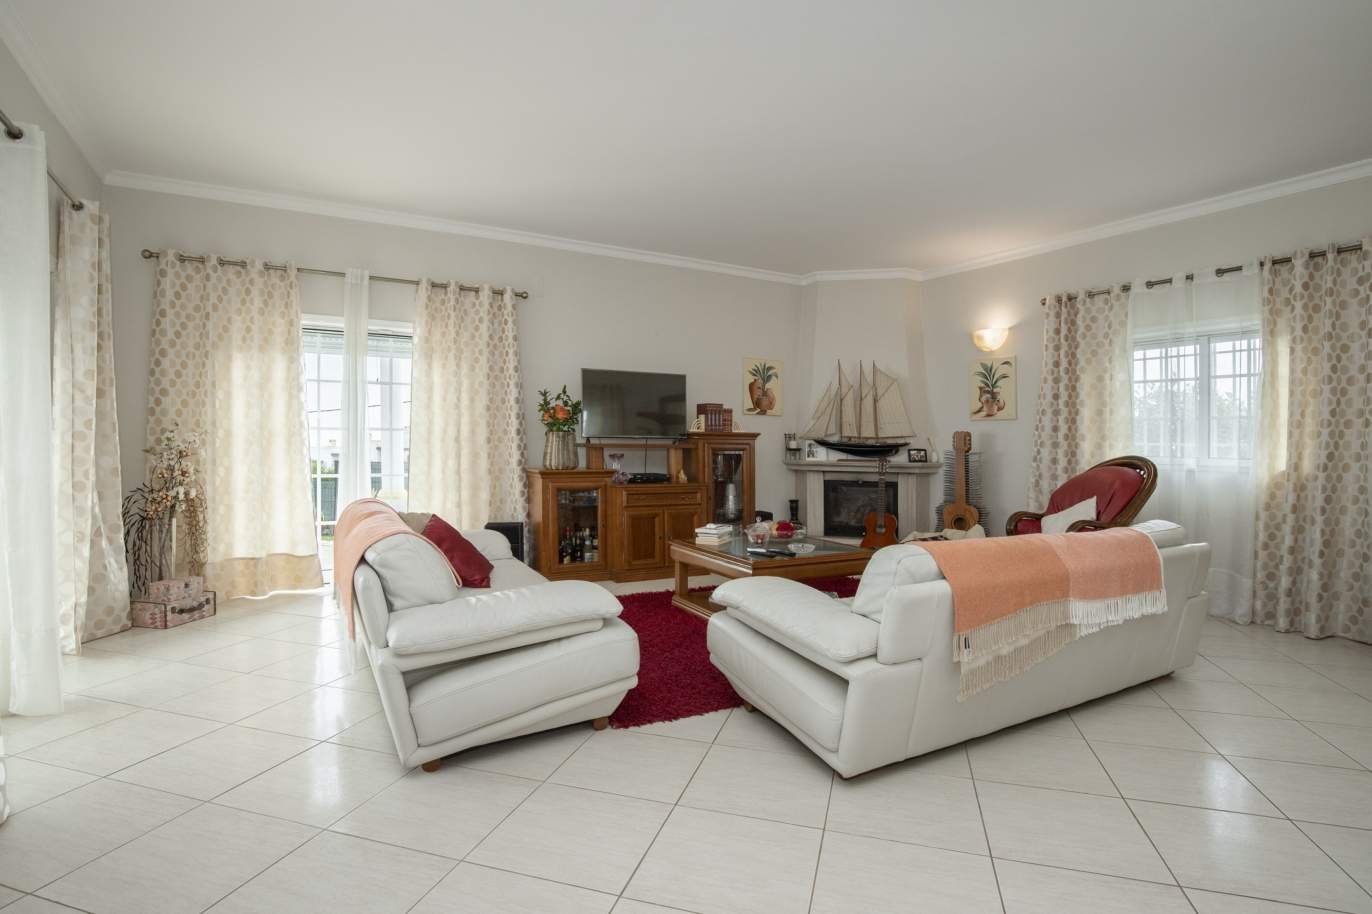 4 Bedroom Villa with swimming pool, for sale, in Albufeira, Algarve_196111